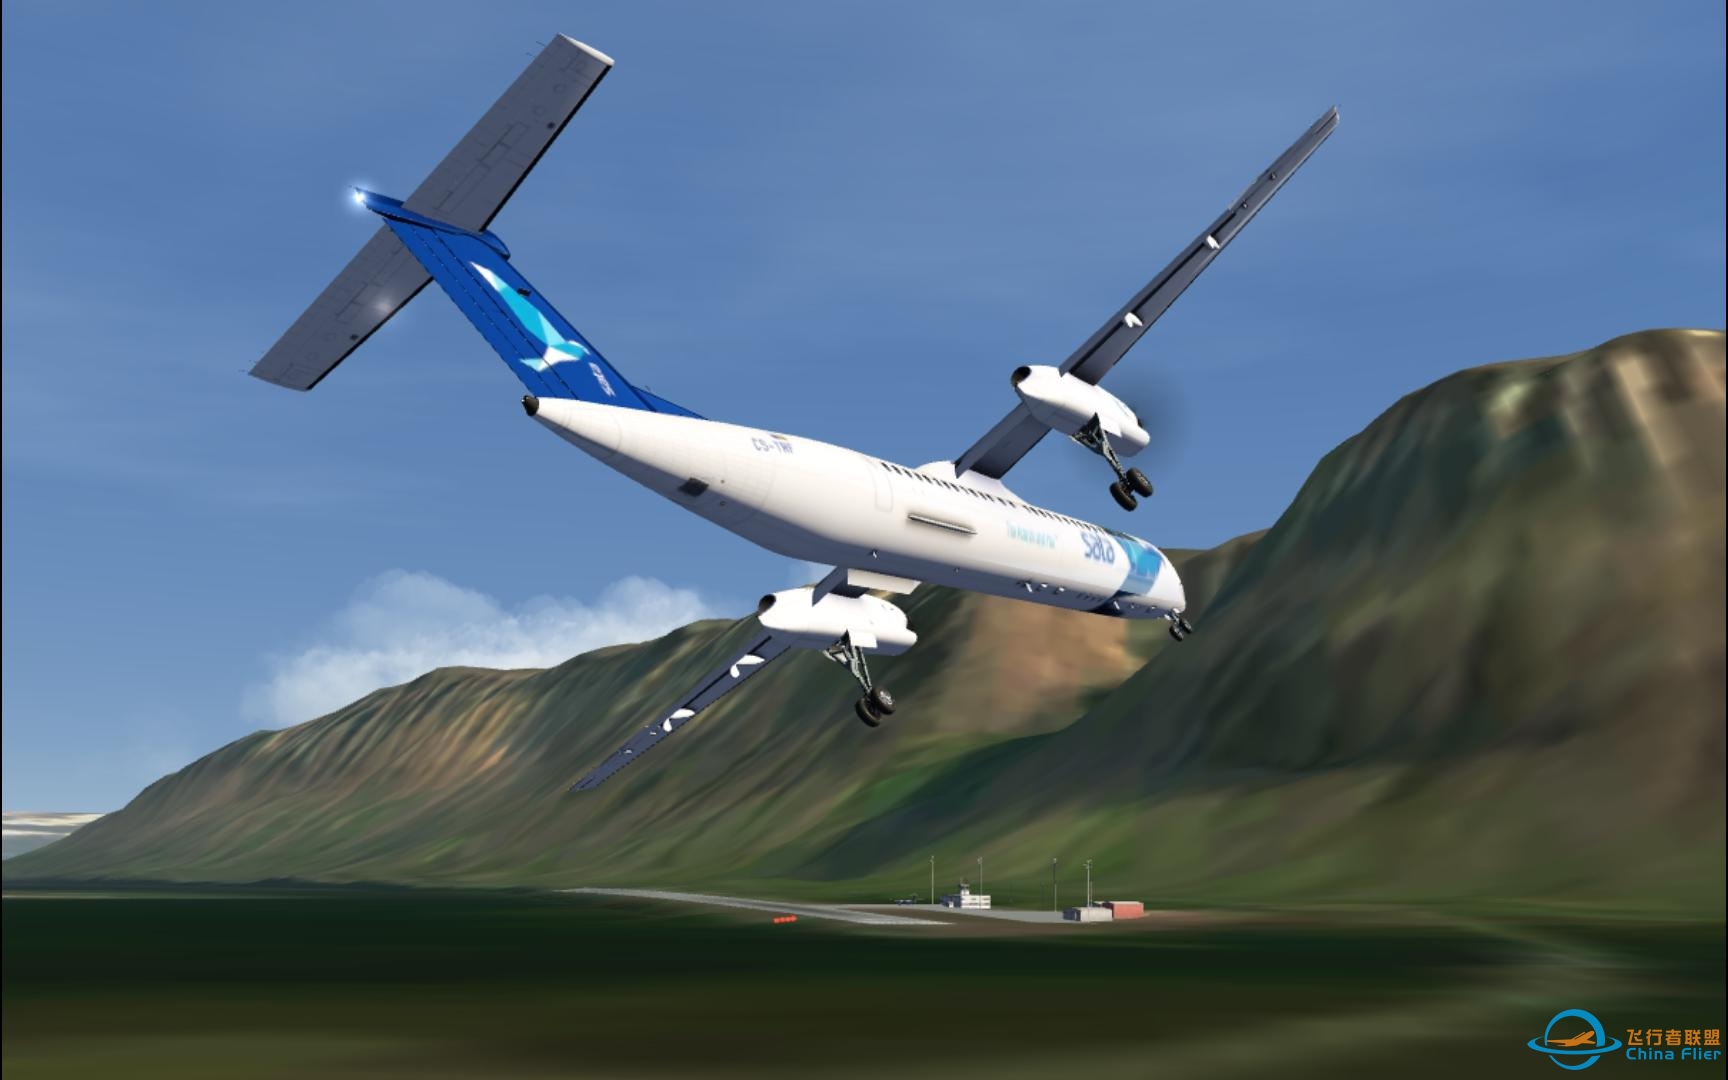 【Aerofly】超刺激的目视回转降落 冰岛伊萨菲厄泽机场RWY08盘旋进近-2147 